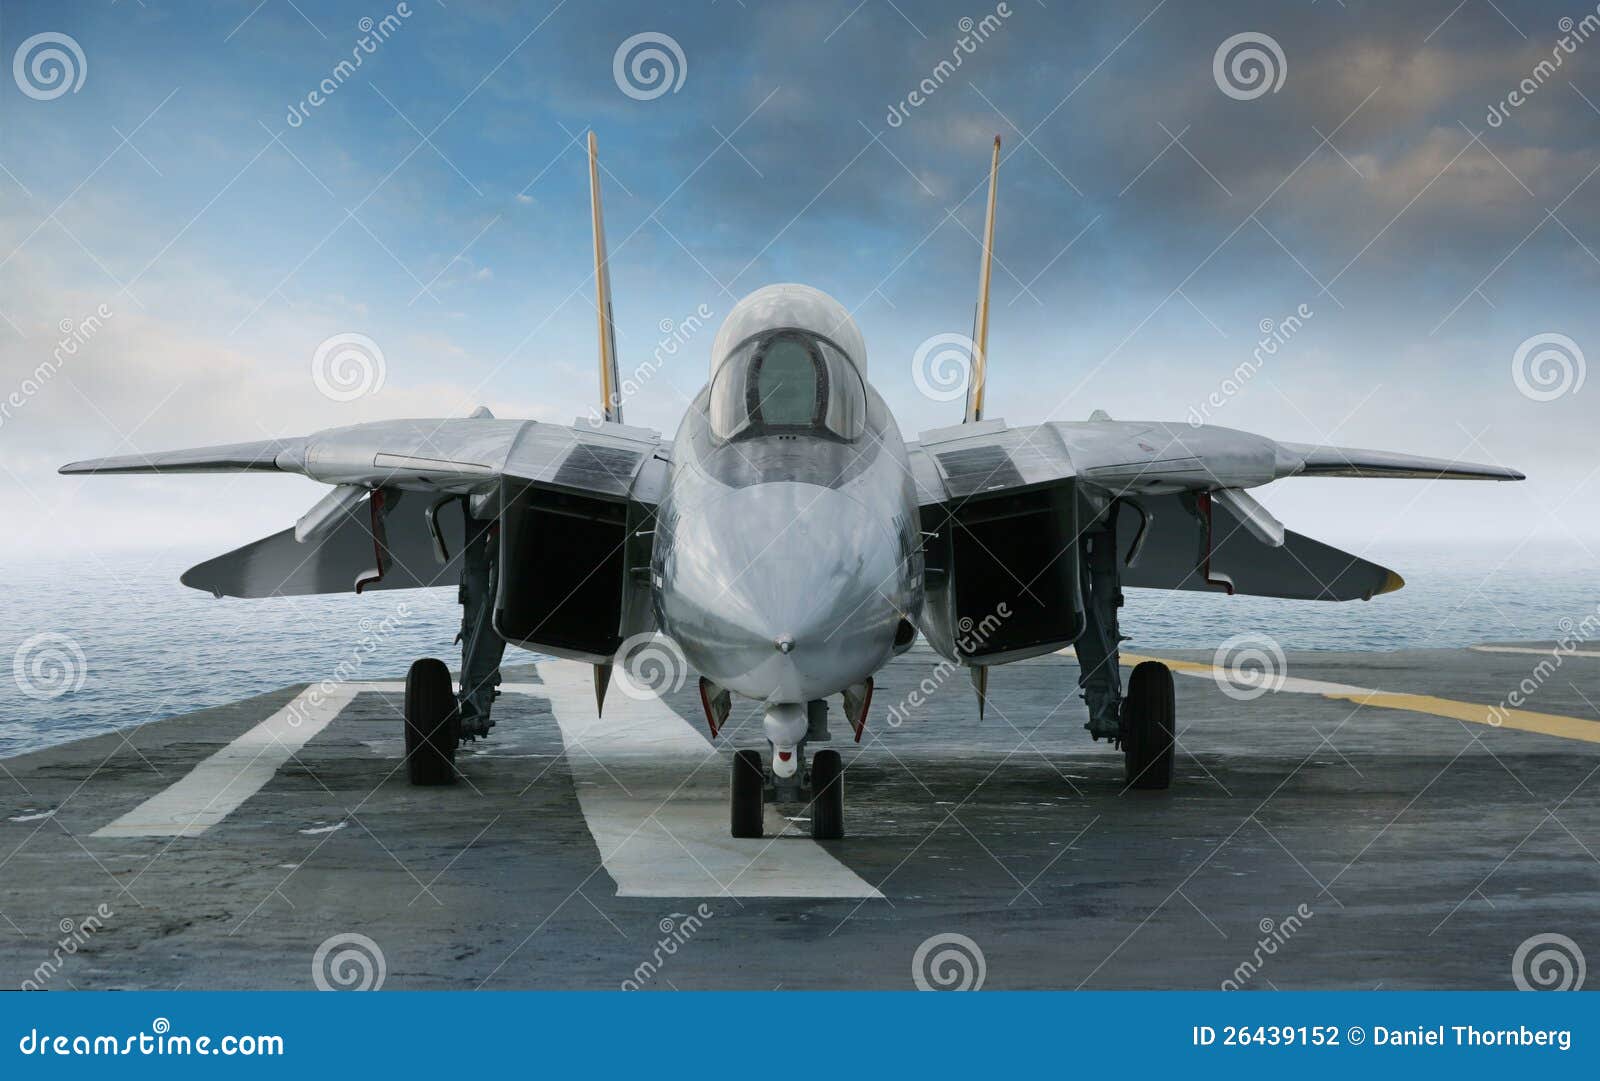 f 14 tomcat jet fighter on a carrier deck